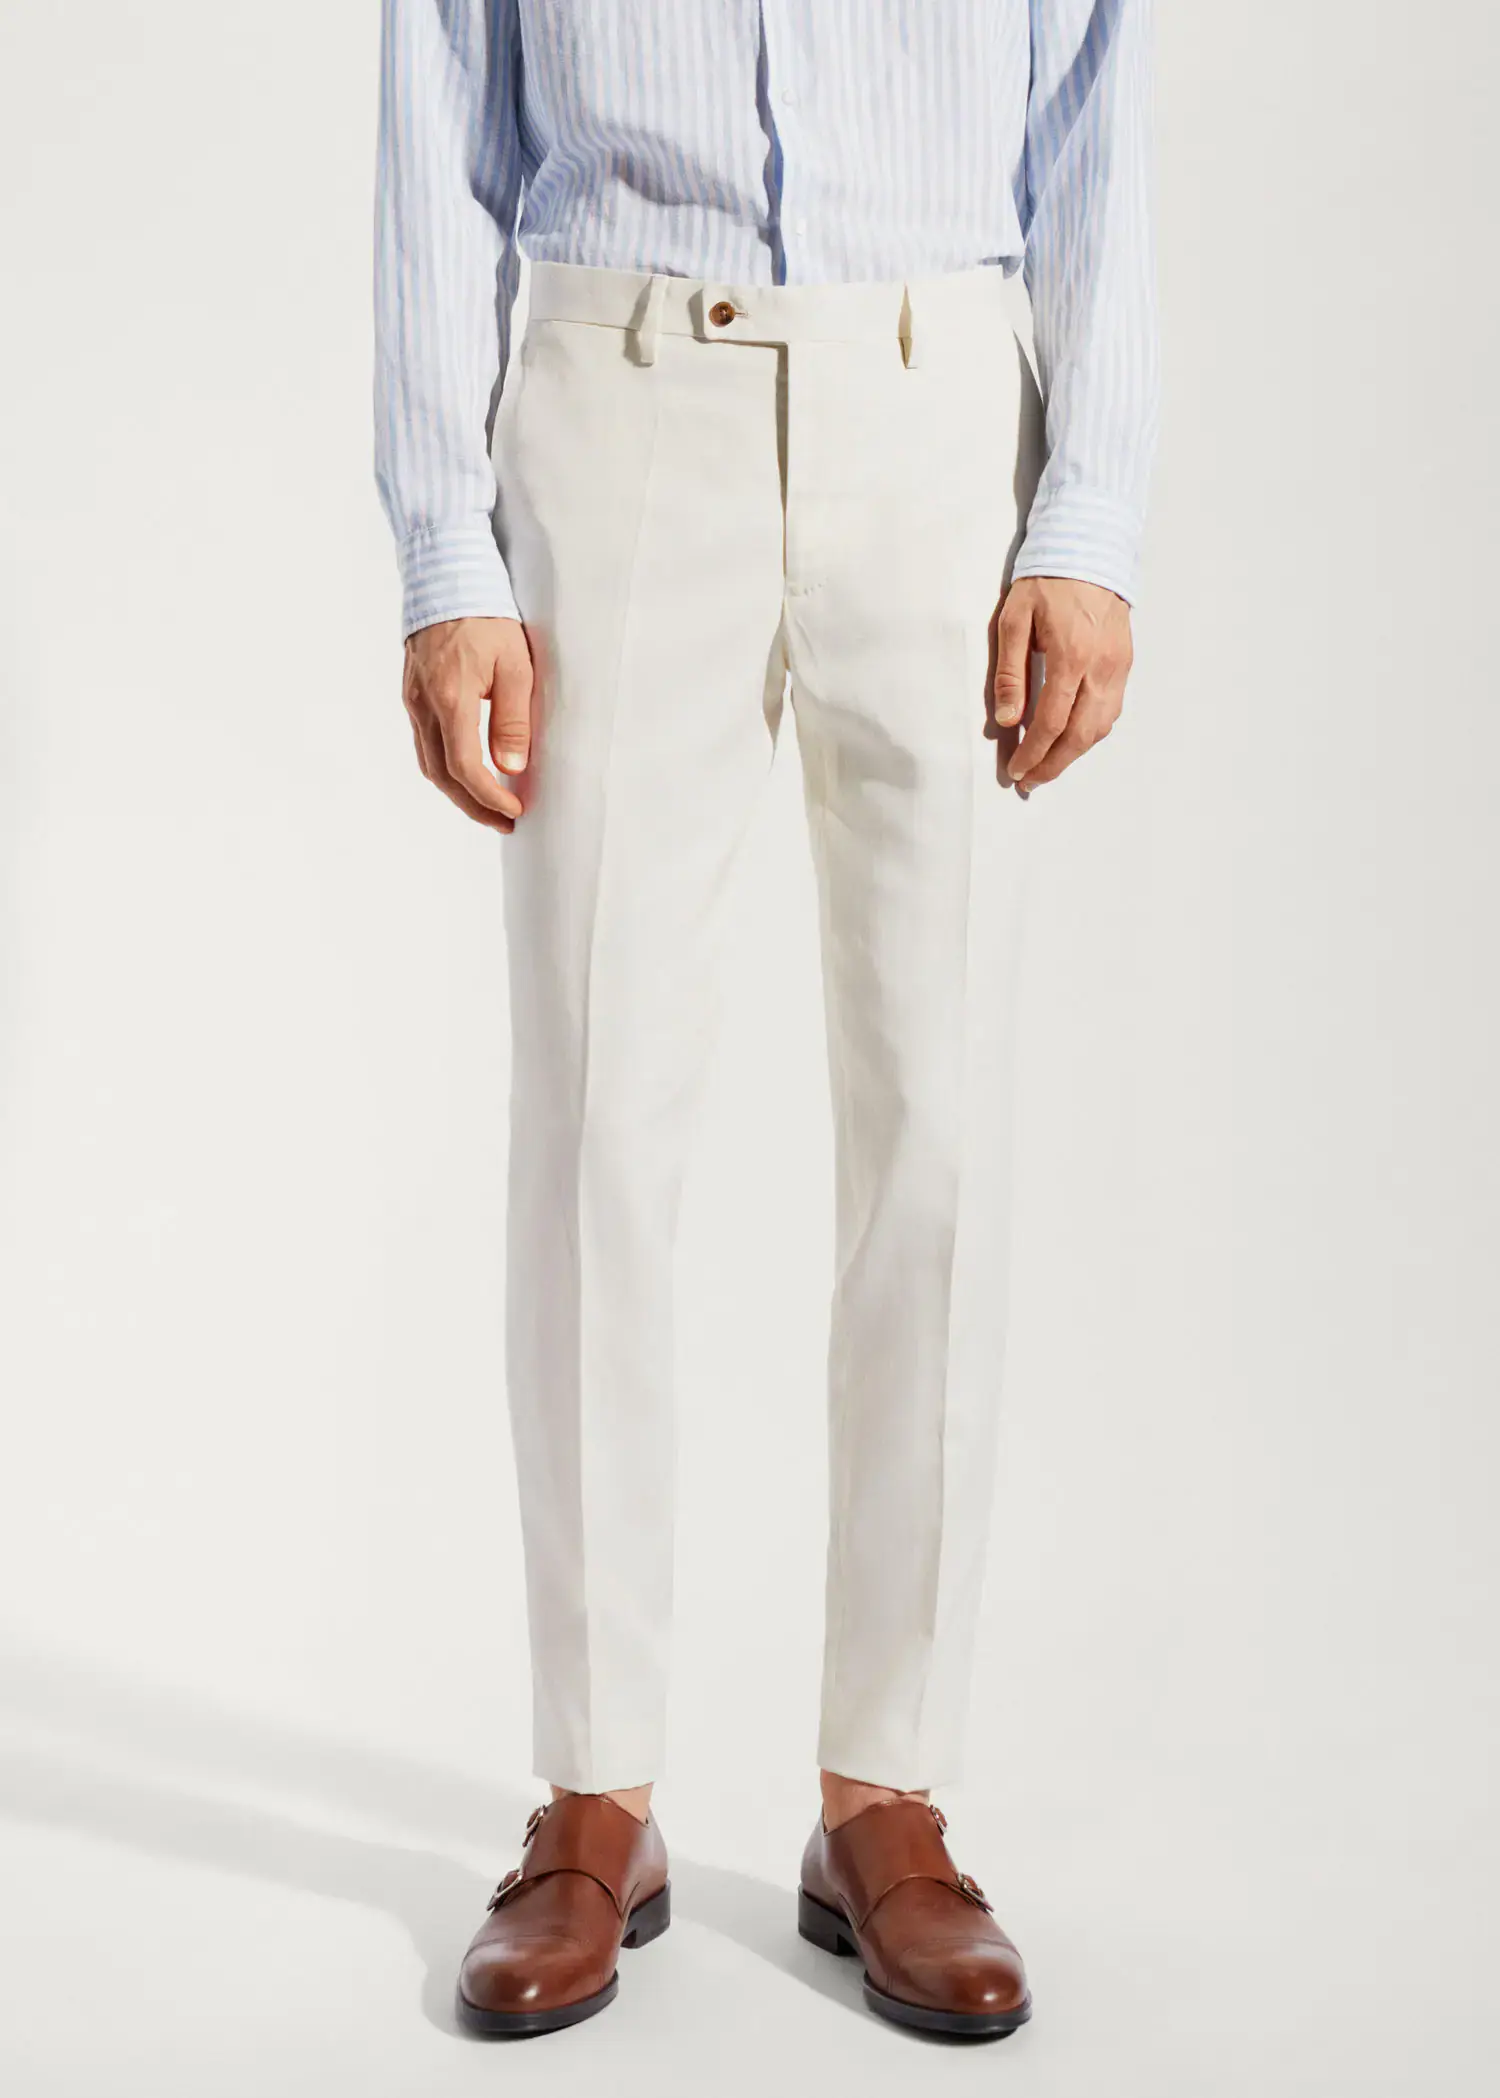 Mango 100% linen suit trousers. a man wearing a pair of white dress pants. 